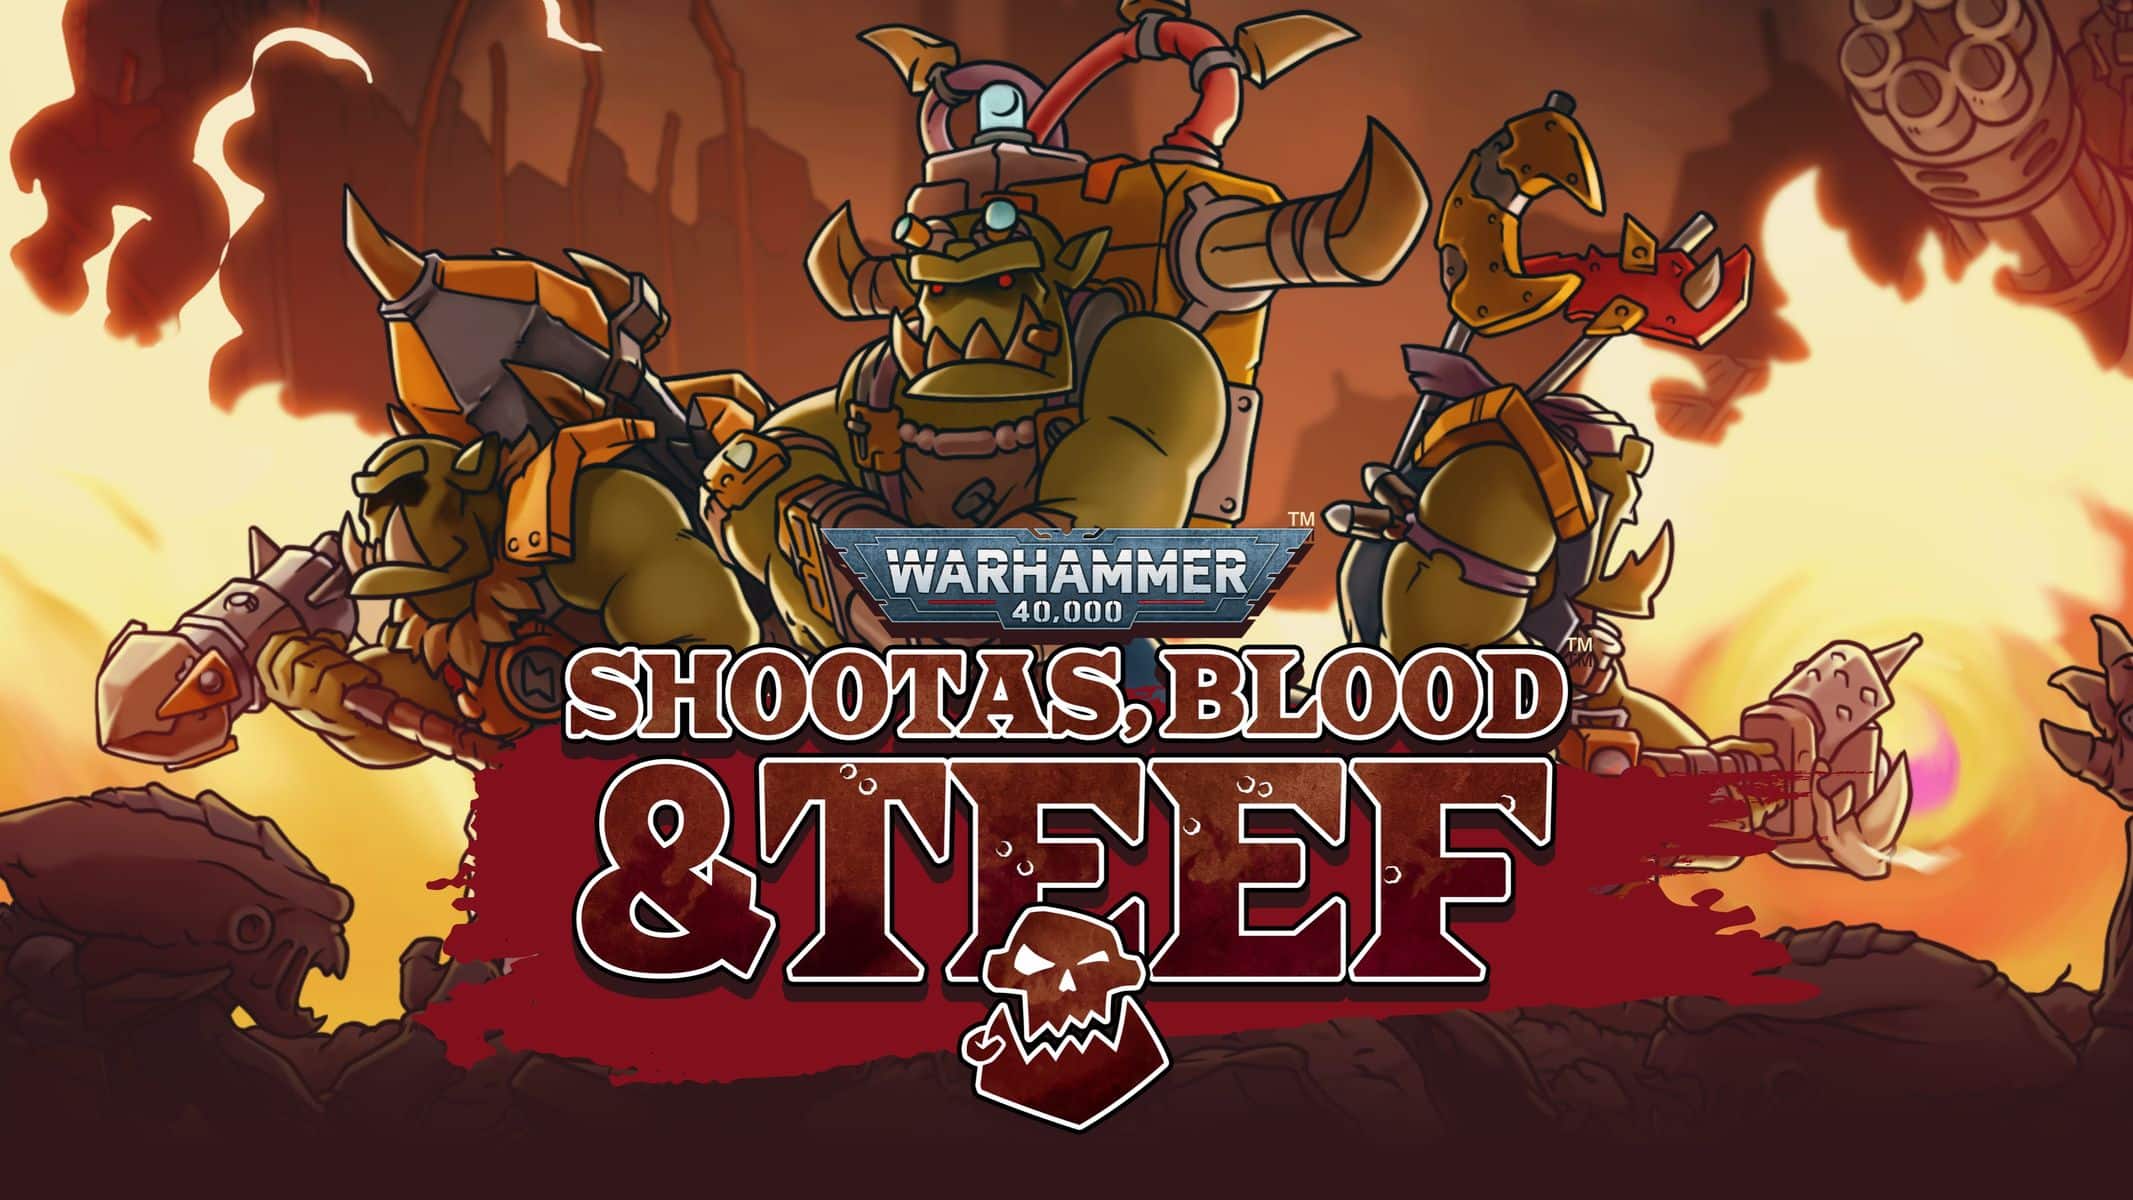 Warhammer 40,000 Shootas, Blood & Teef Review